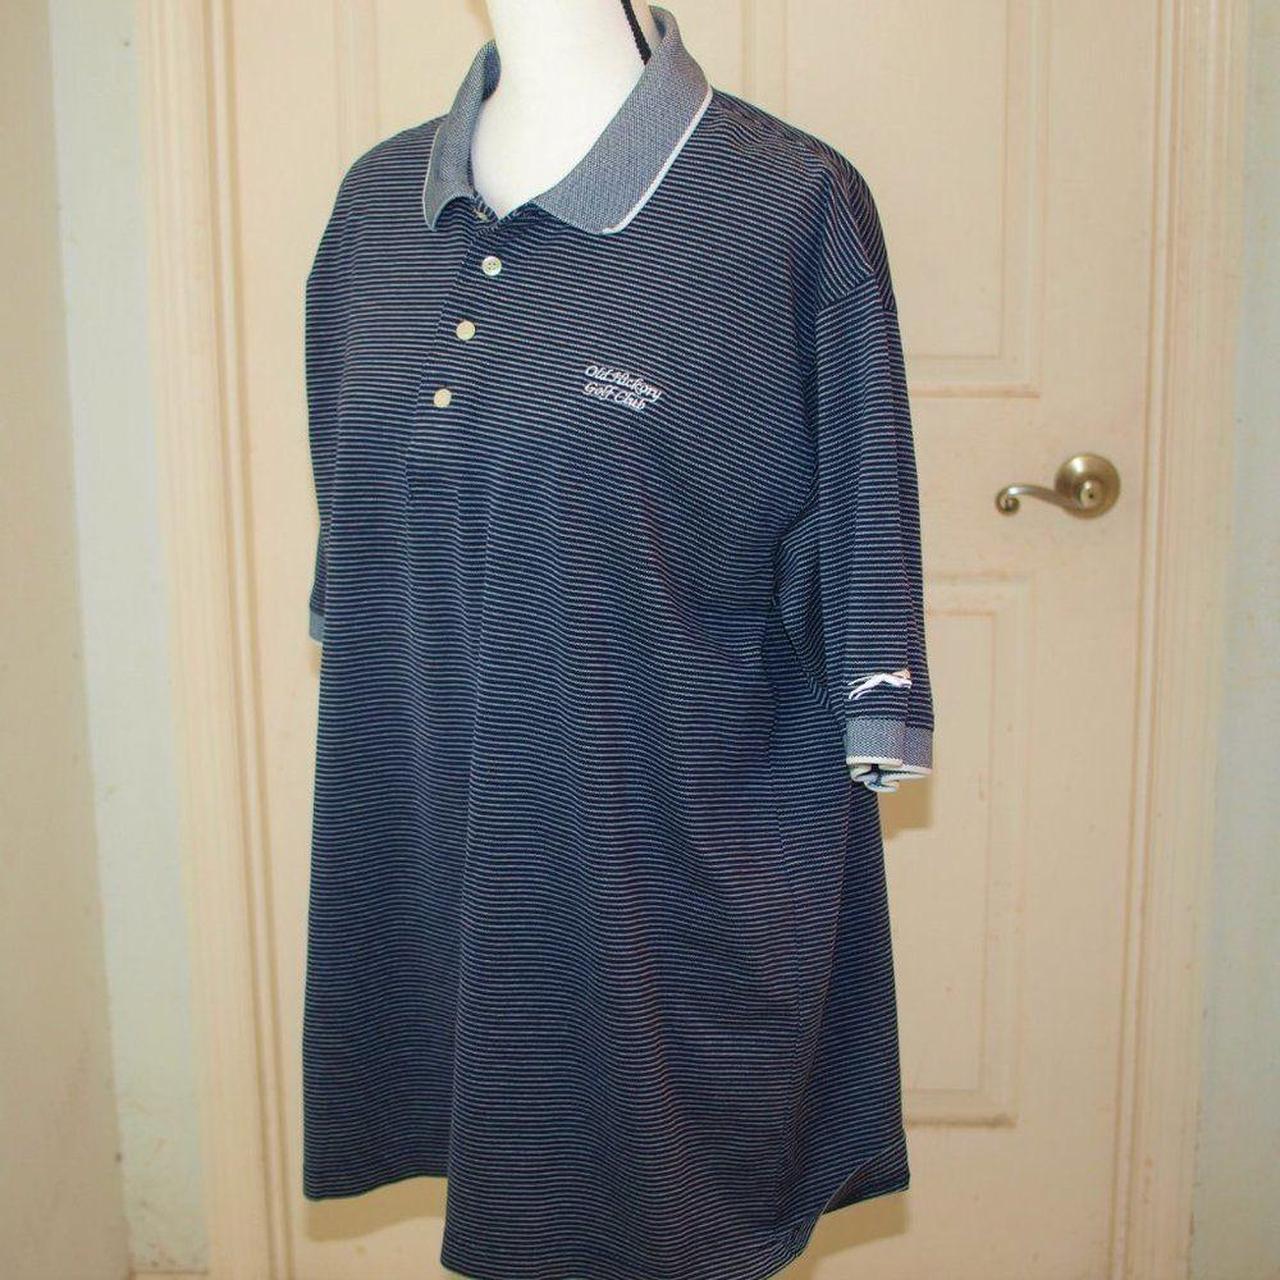 Product Image 2 - Slazenger Black Stripes Golf Shirt